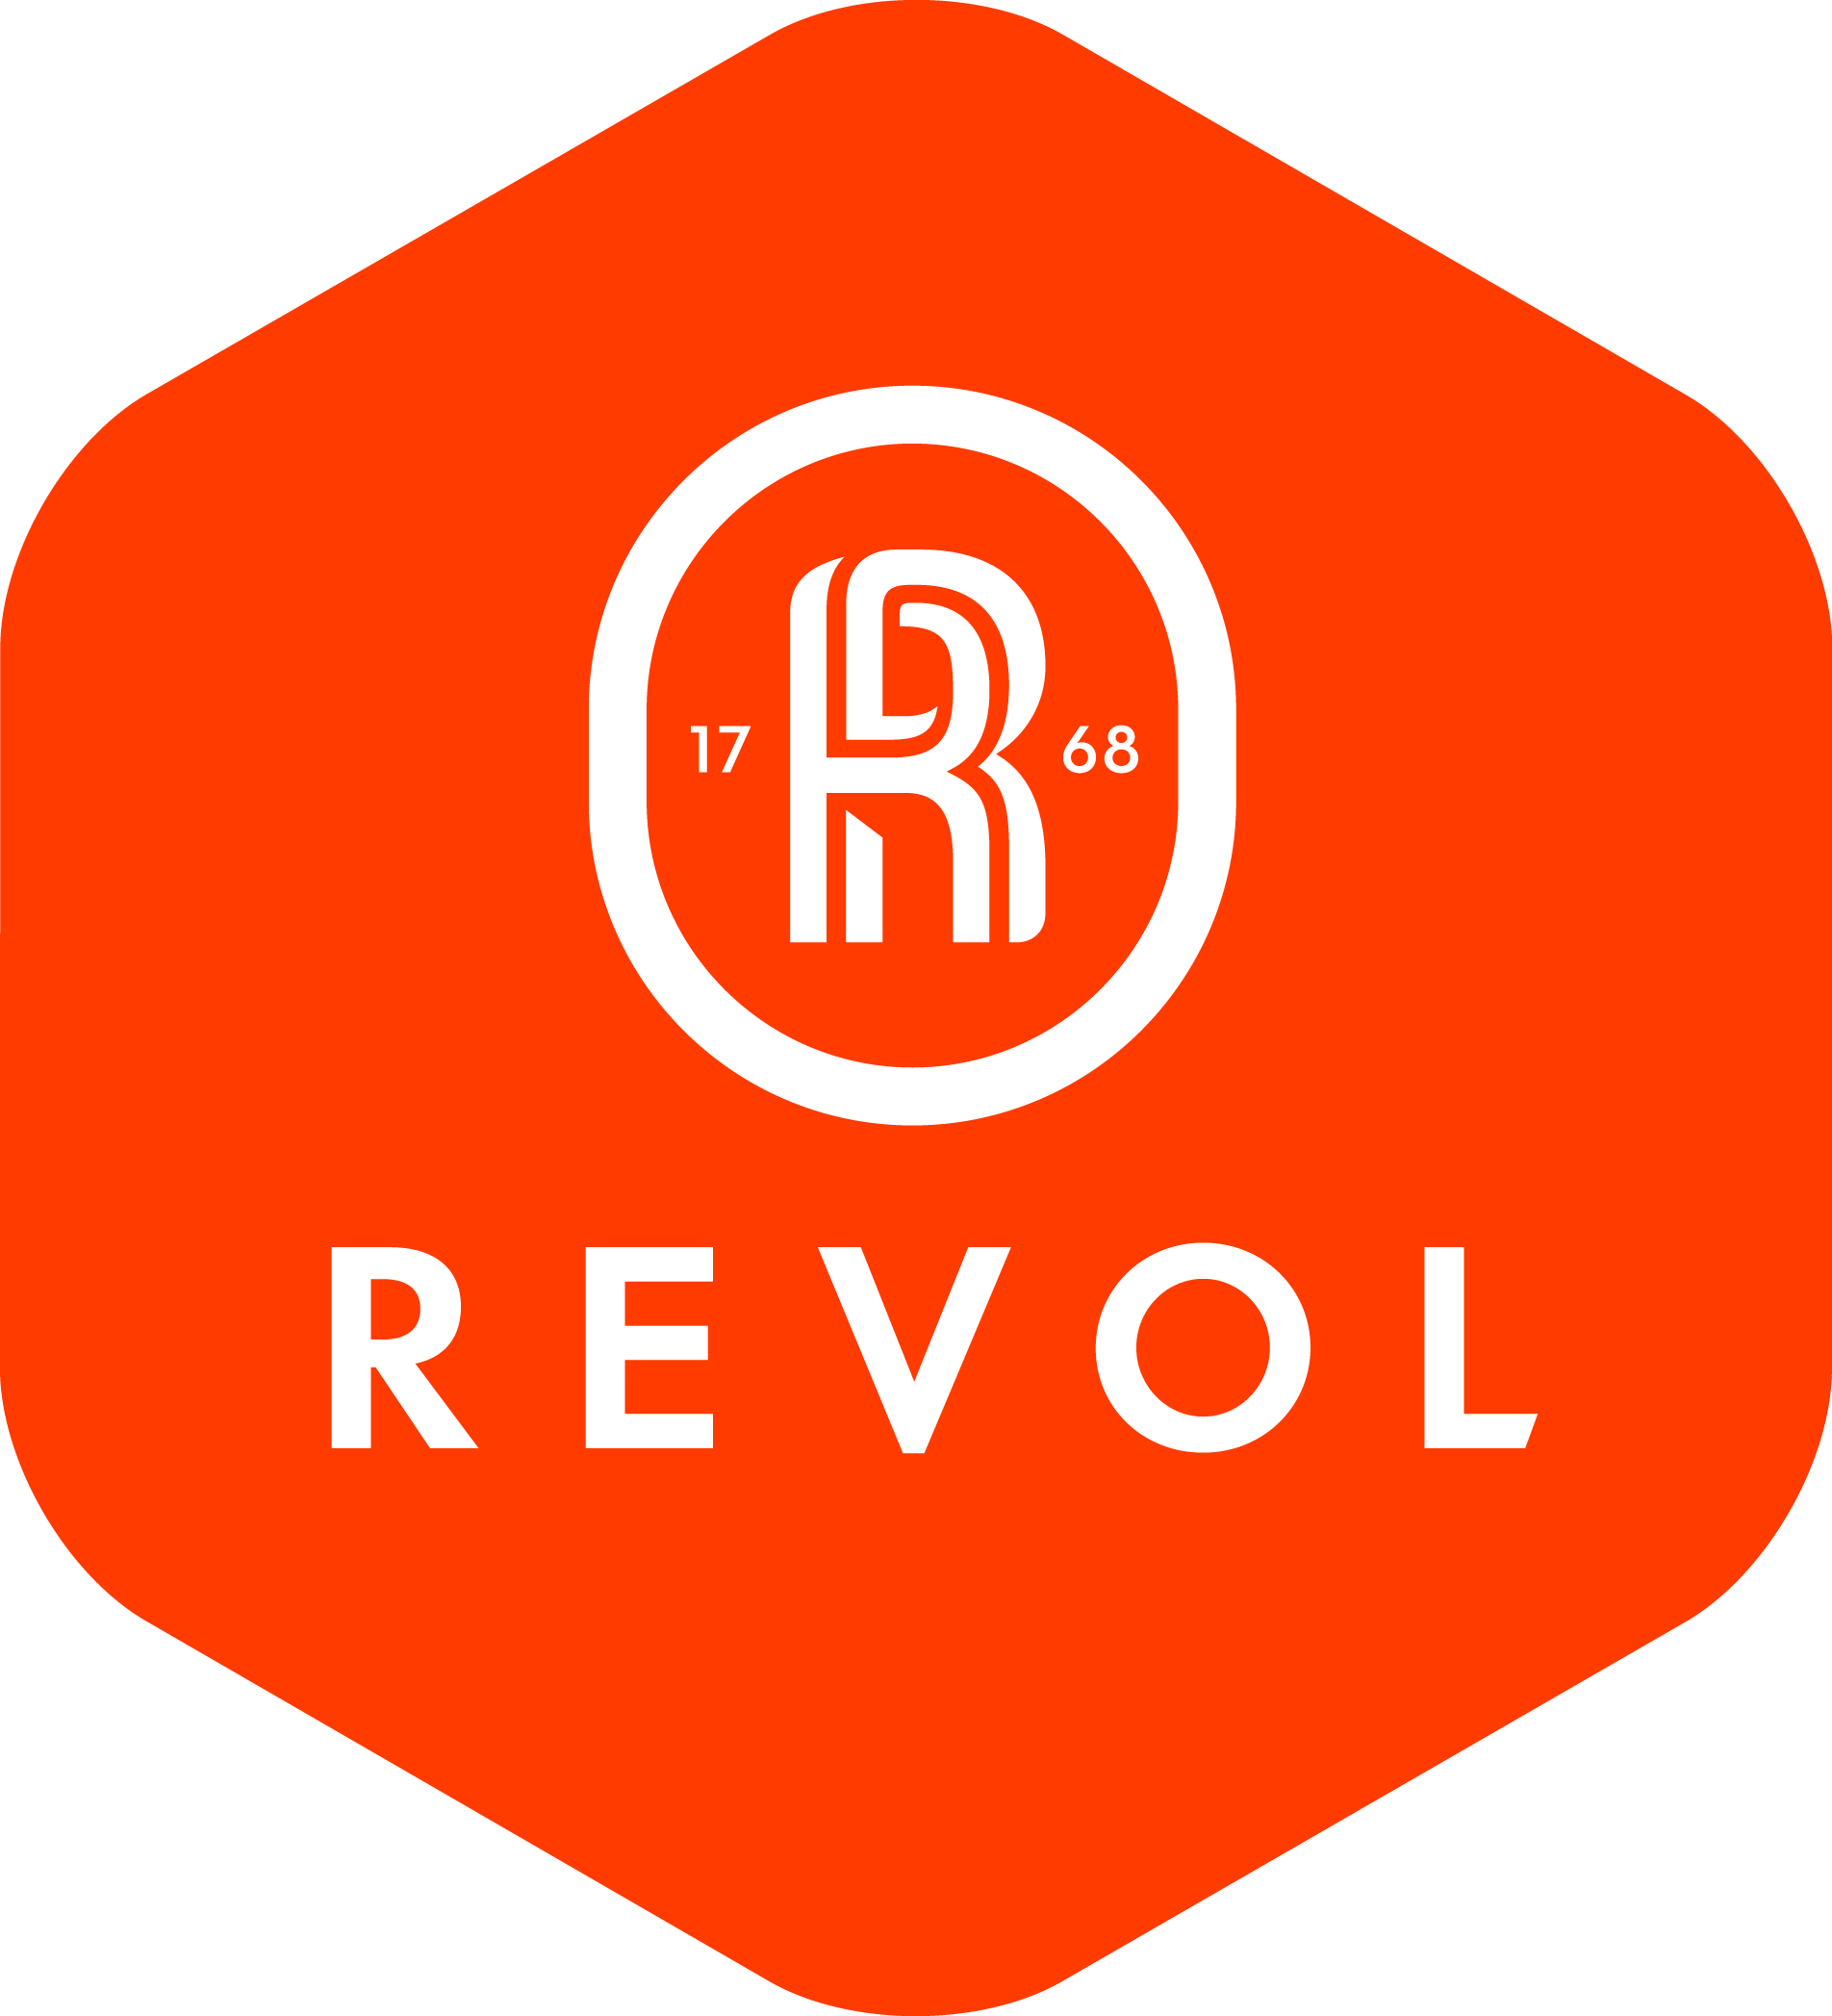 REVOL Retail_large logo_CMYK_jpeg.jpg